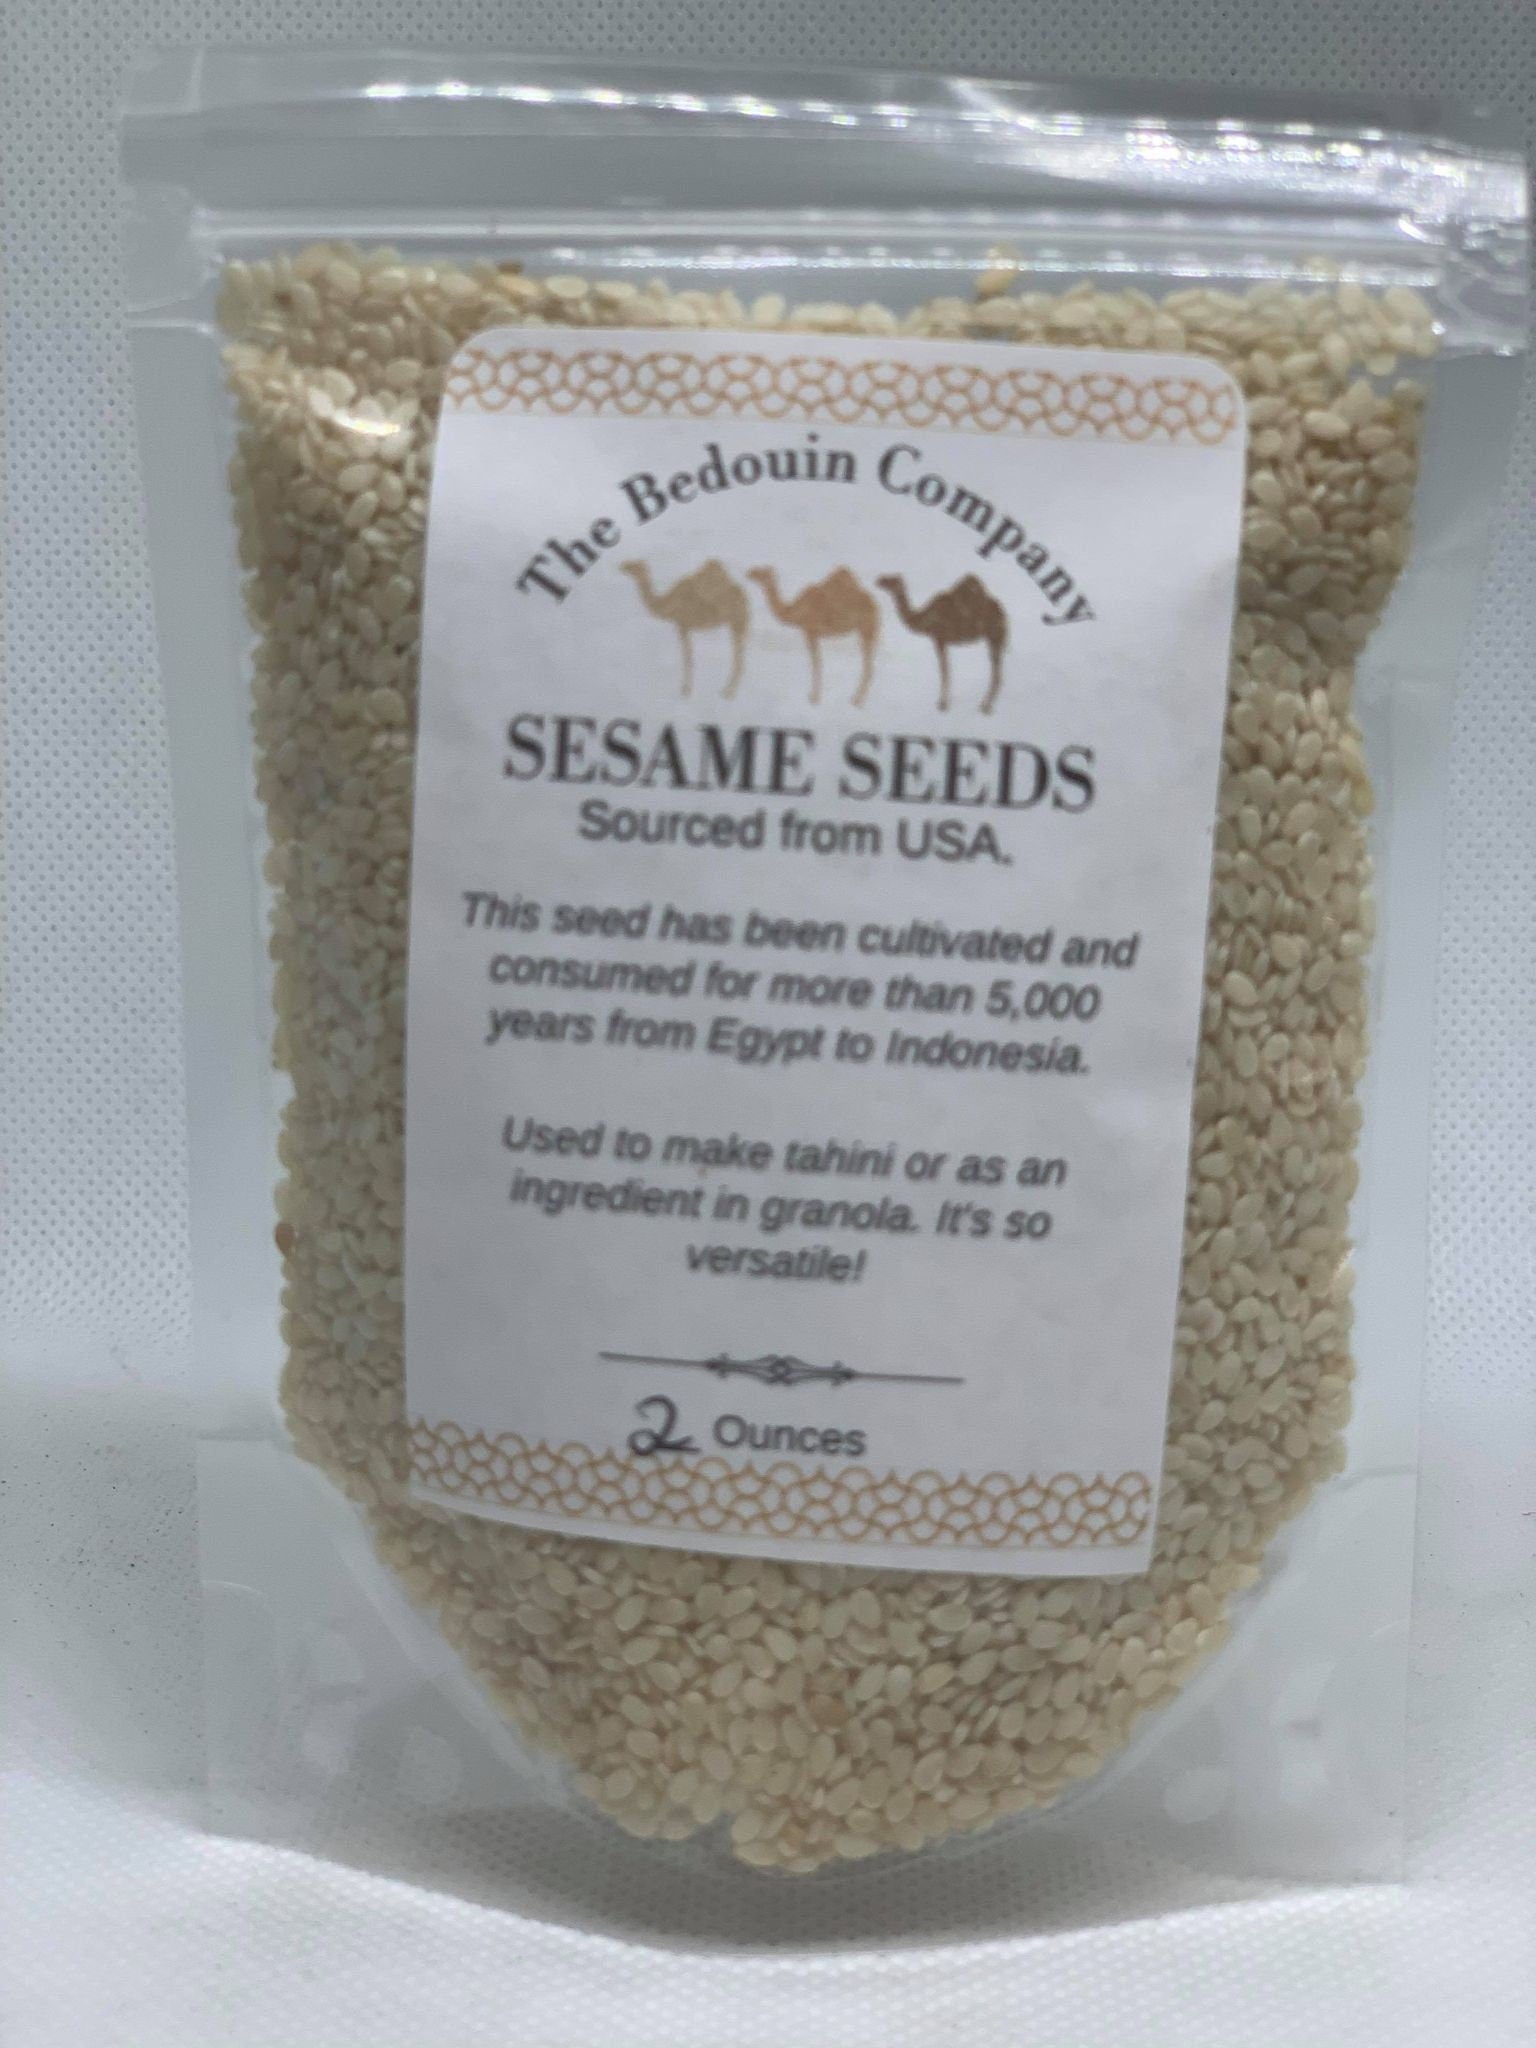 DO IT ORGANIC  Organic Sesame Seeds Supplier and Wholesaler